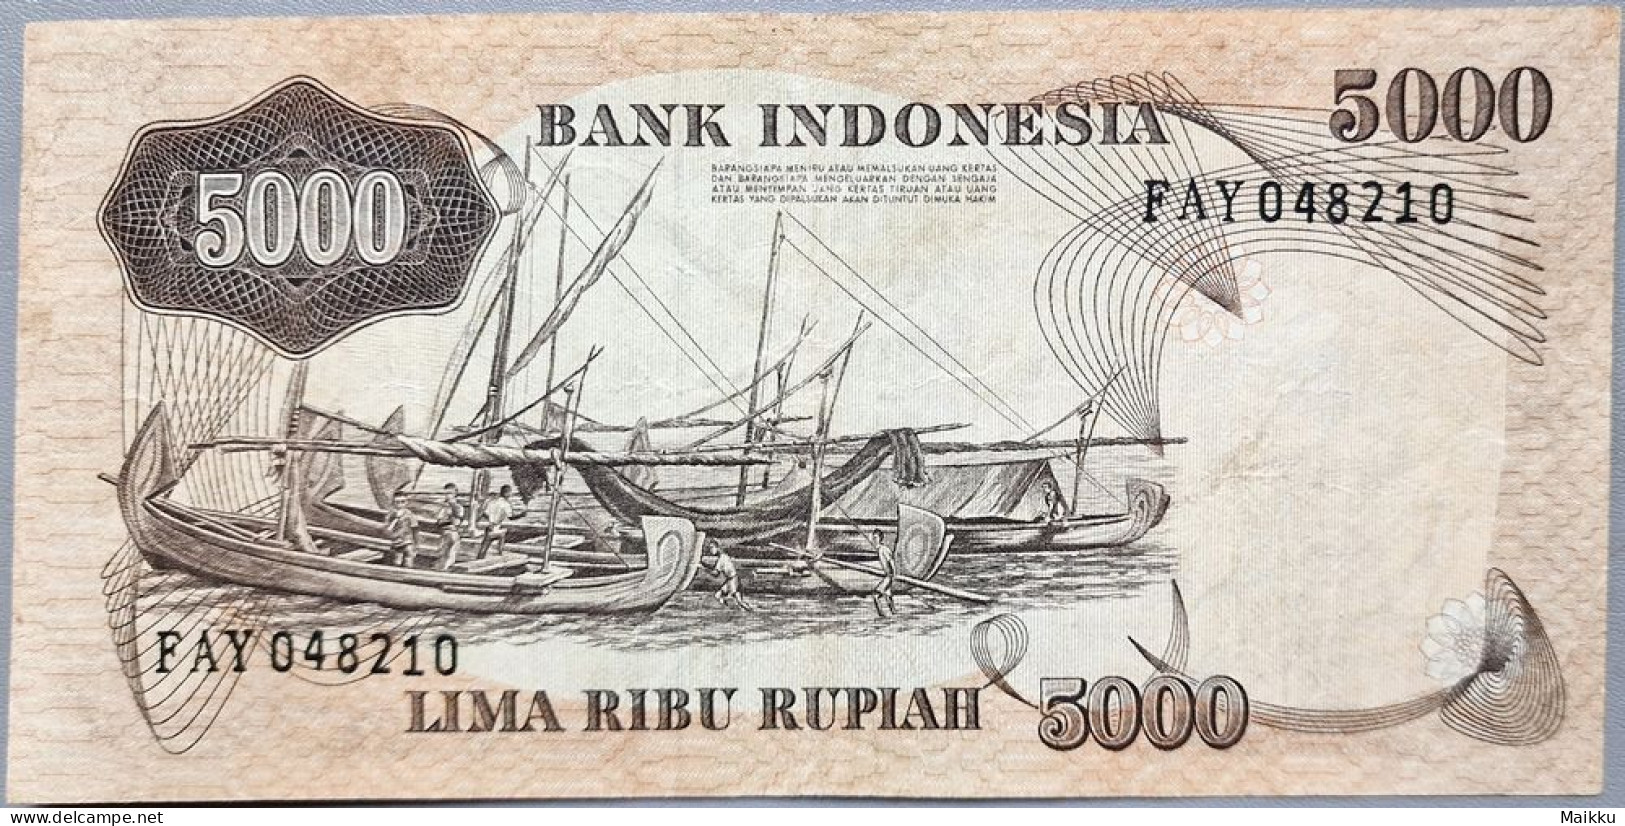 Indonesia 5000 Rupiah 1975 P-114 VF+ (circulated) - Indonesia